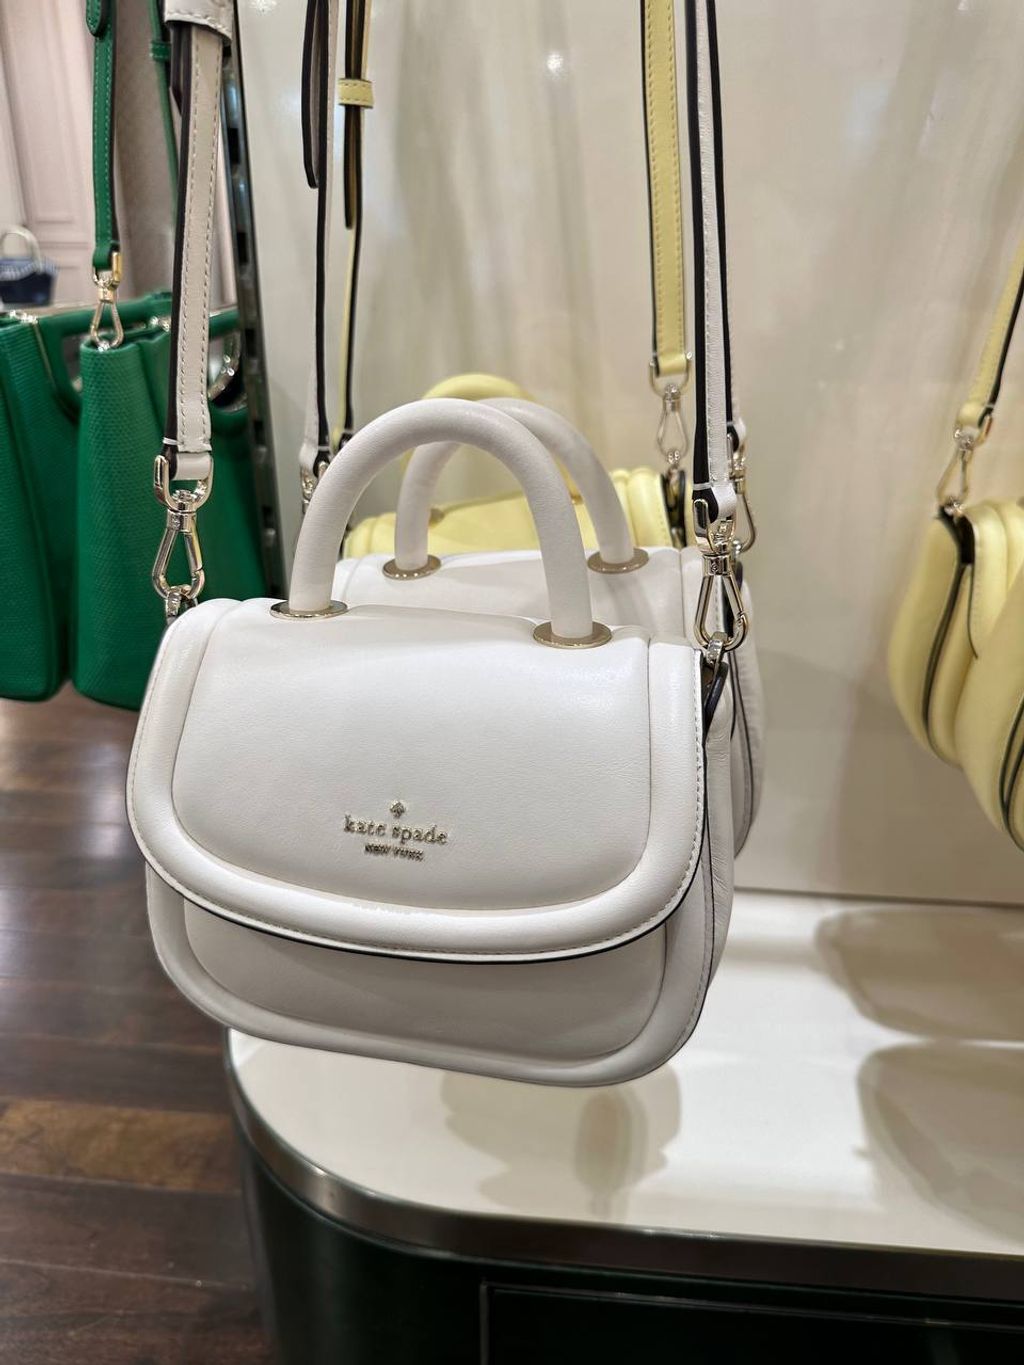 Kate Spade New York Romy Python Embossed Mini Top-Handle Bag